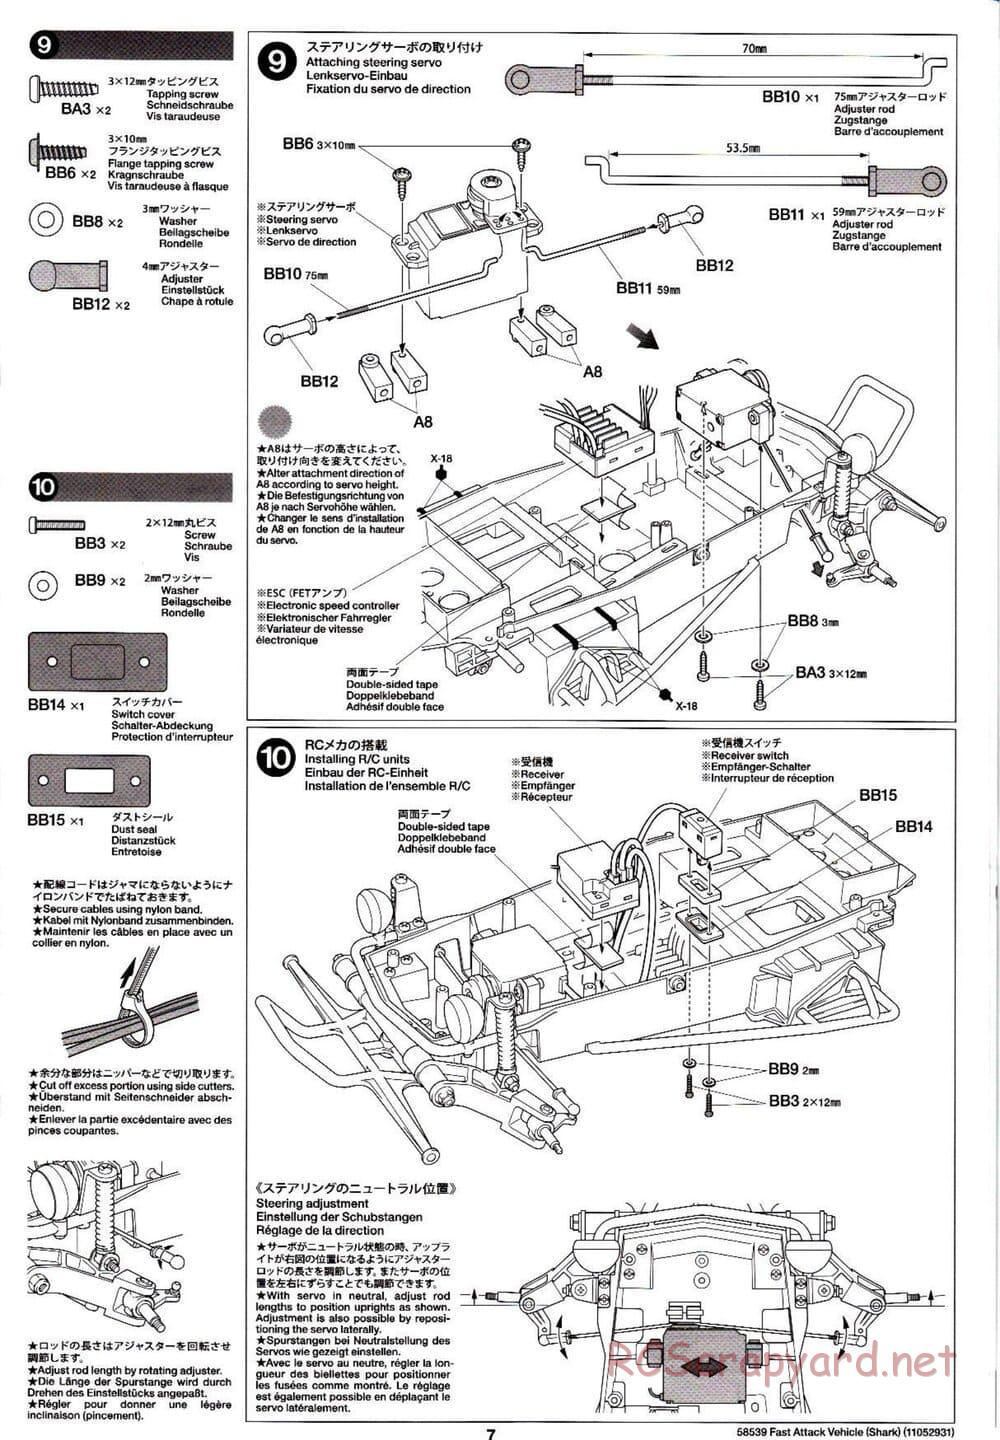 Tamiya - Fast Attack Vehicle w/ Shark Mouth - FAV Chassis - Manual - Page 7